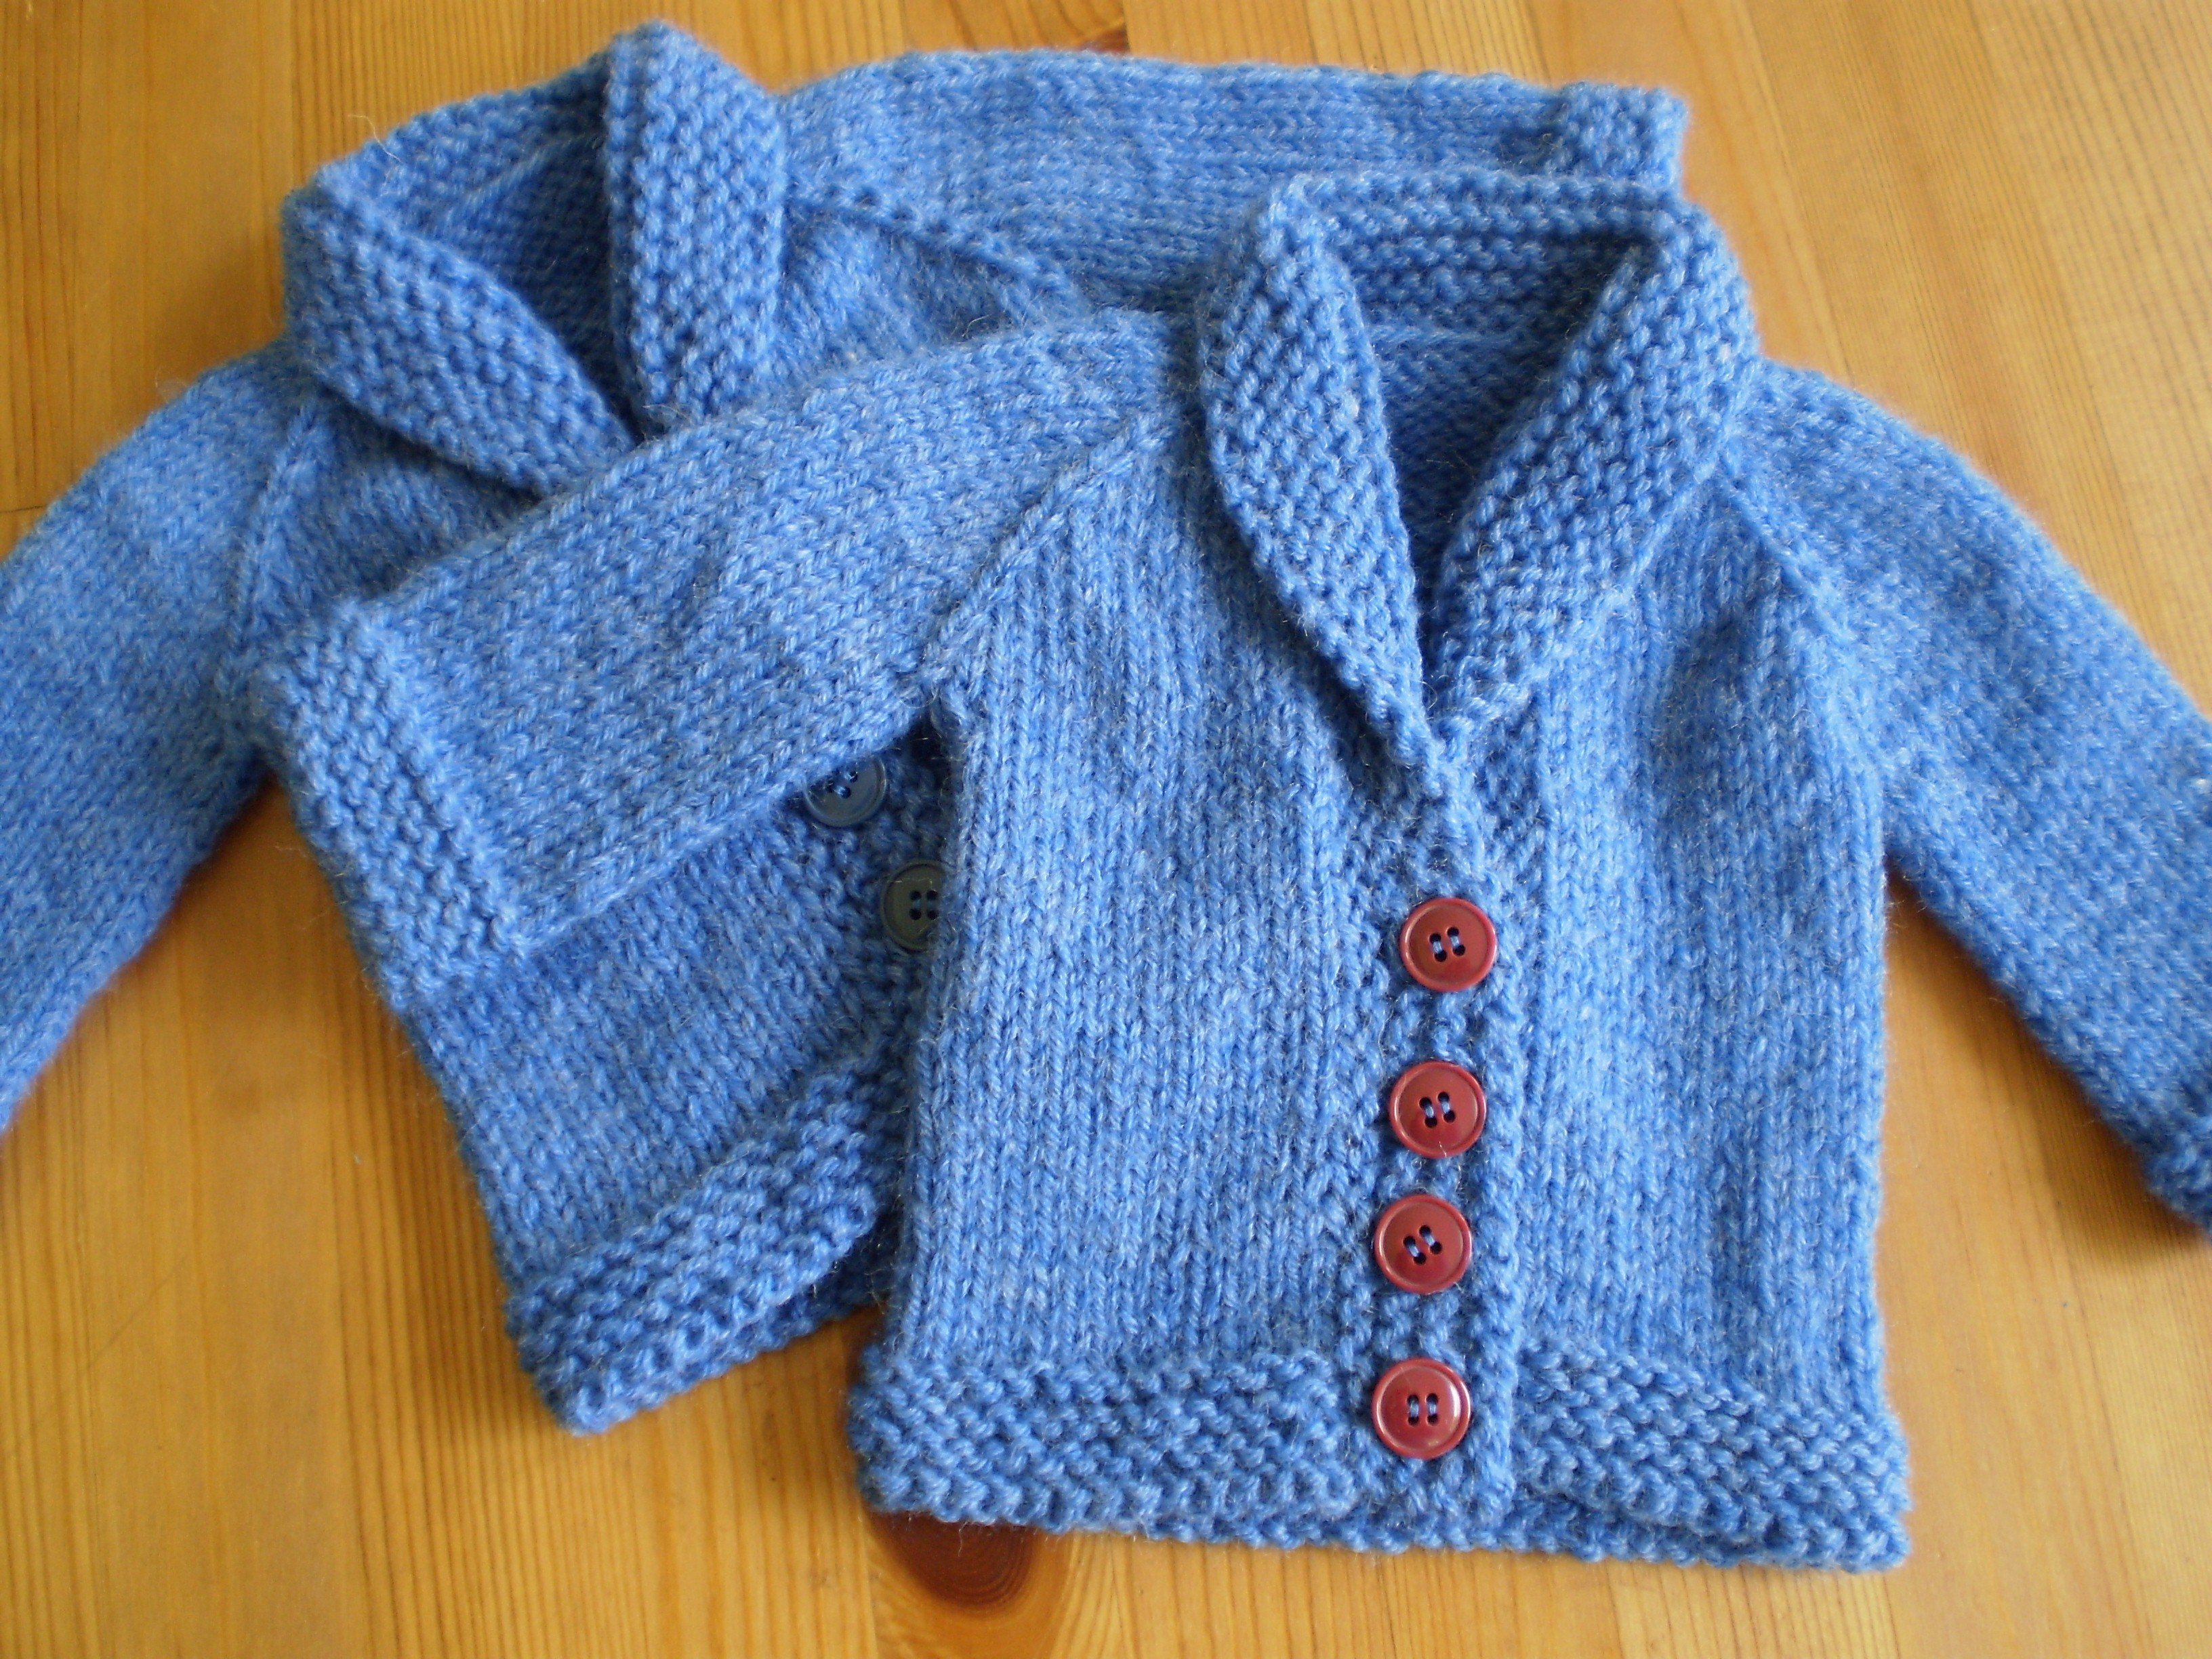 Free Knitting Patterns Download Easy Ba Knitting Patterns Free Download My Crochet Free Knitted